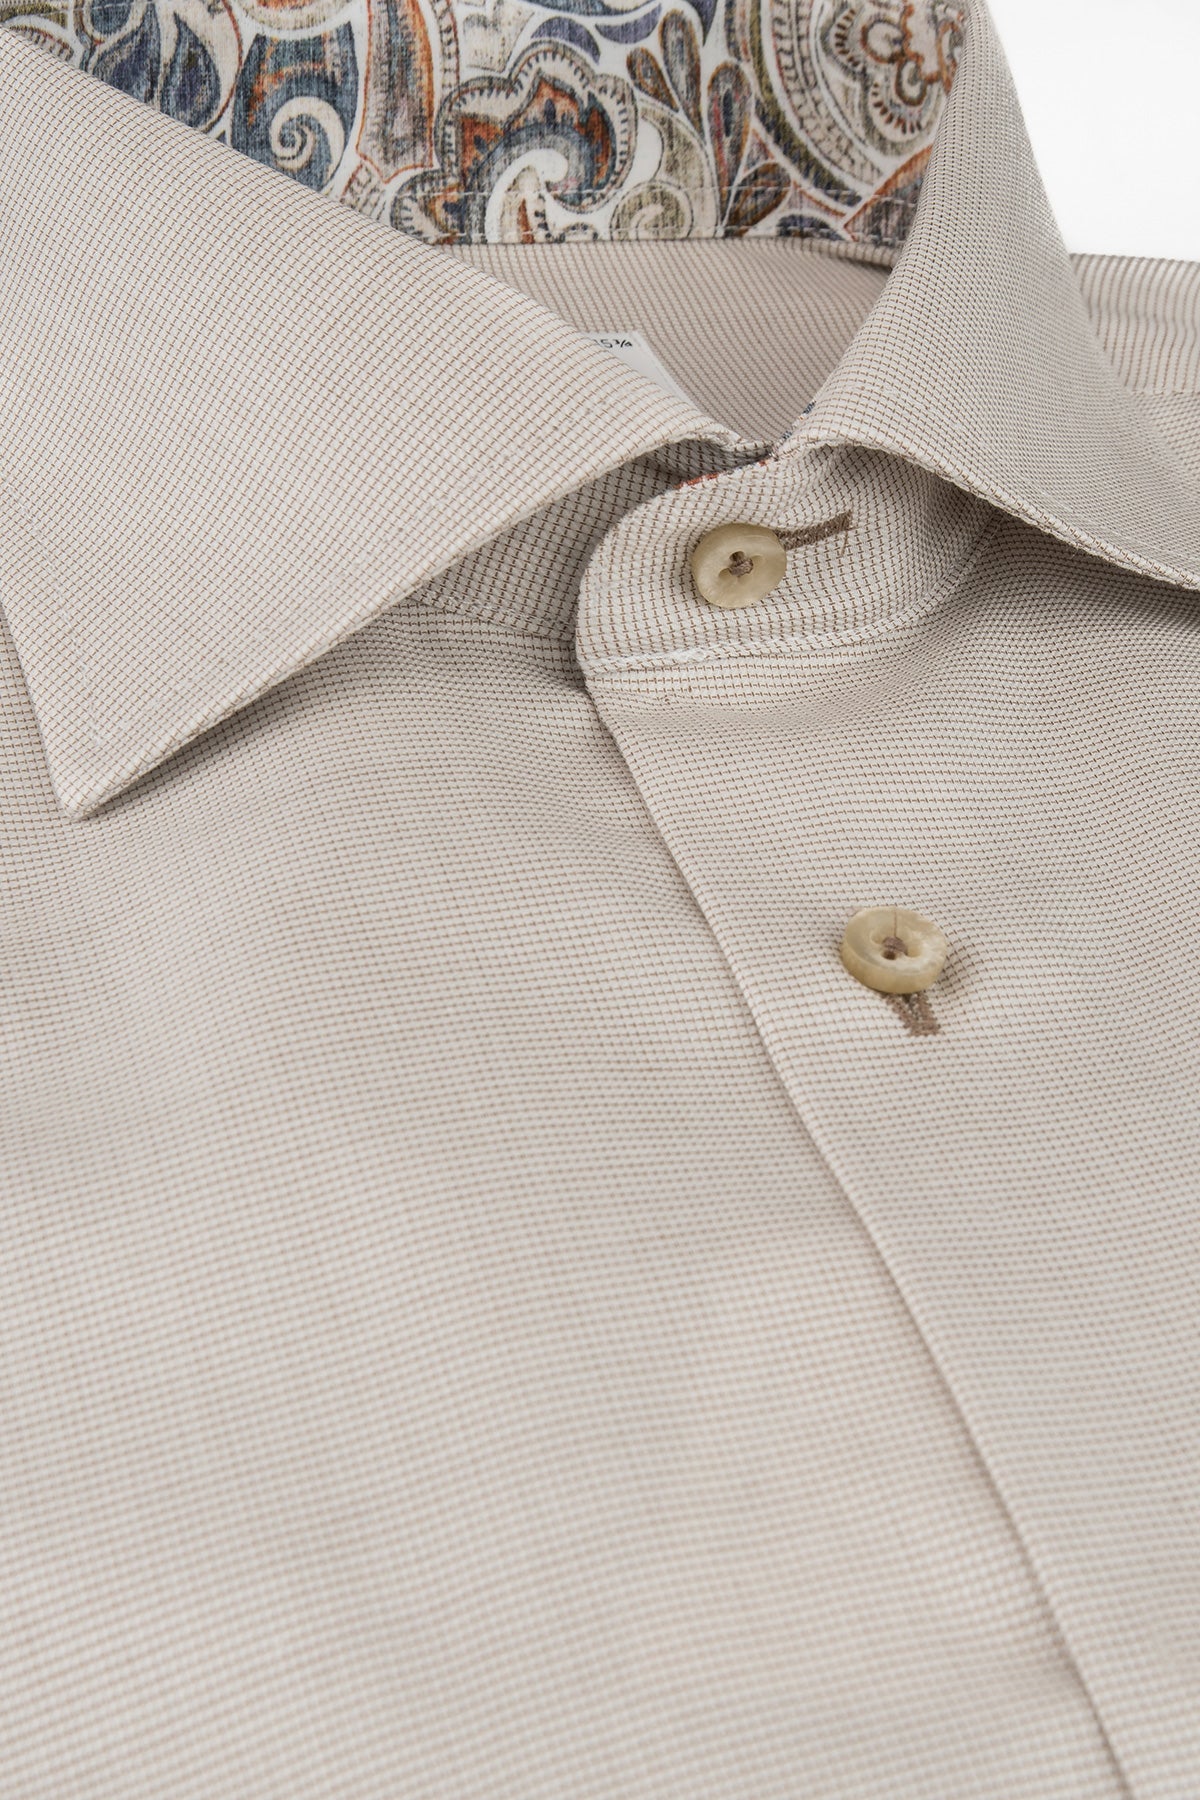 Beige regular fit shirt with contrast details